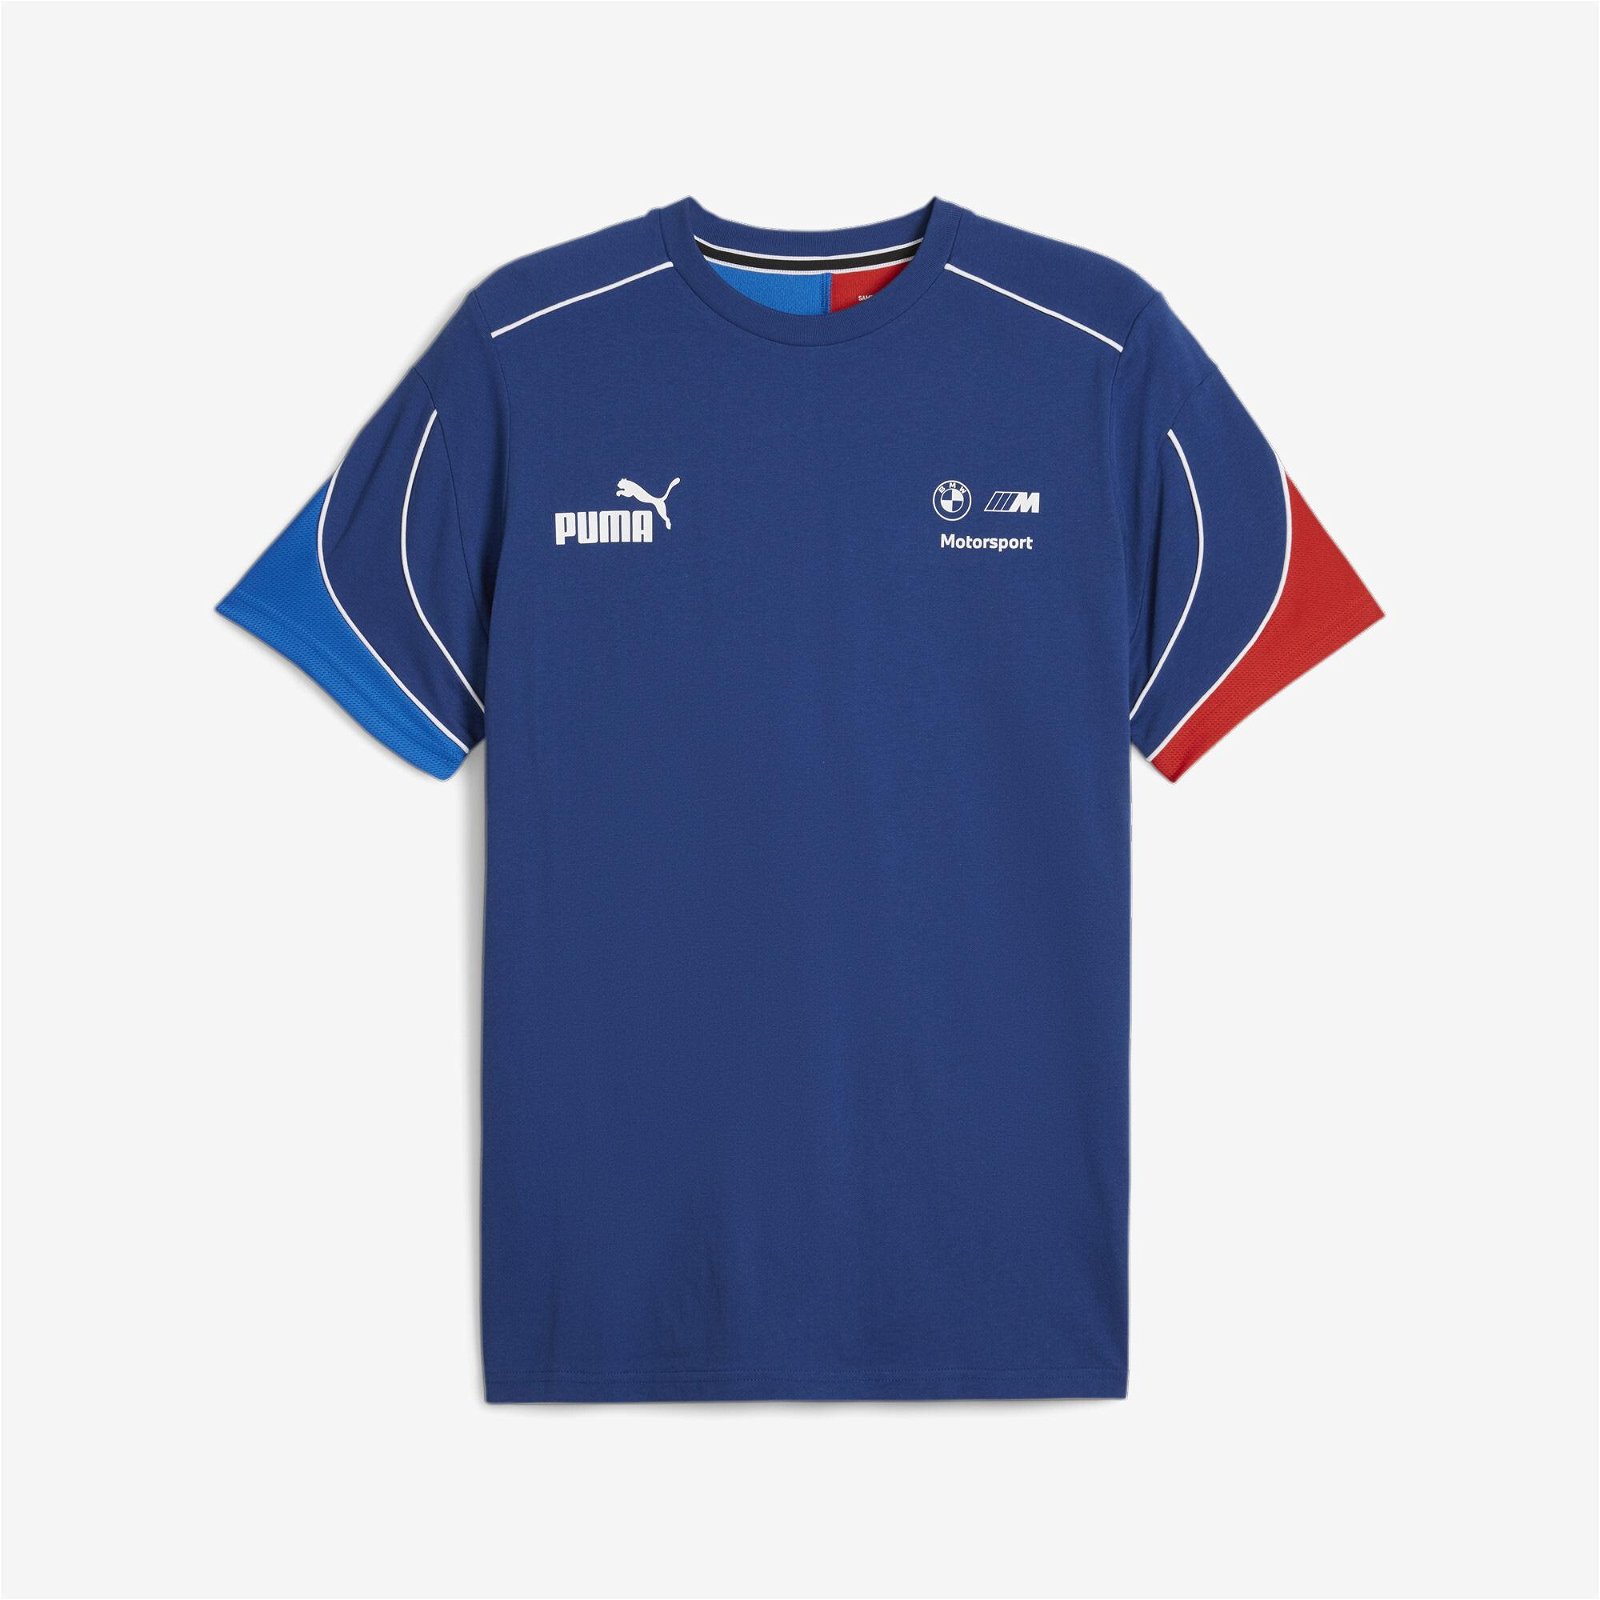 Puma Motorsport MT7 Erkek Mavi T-Shirt